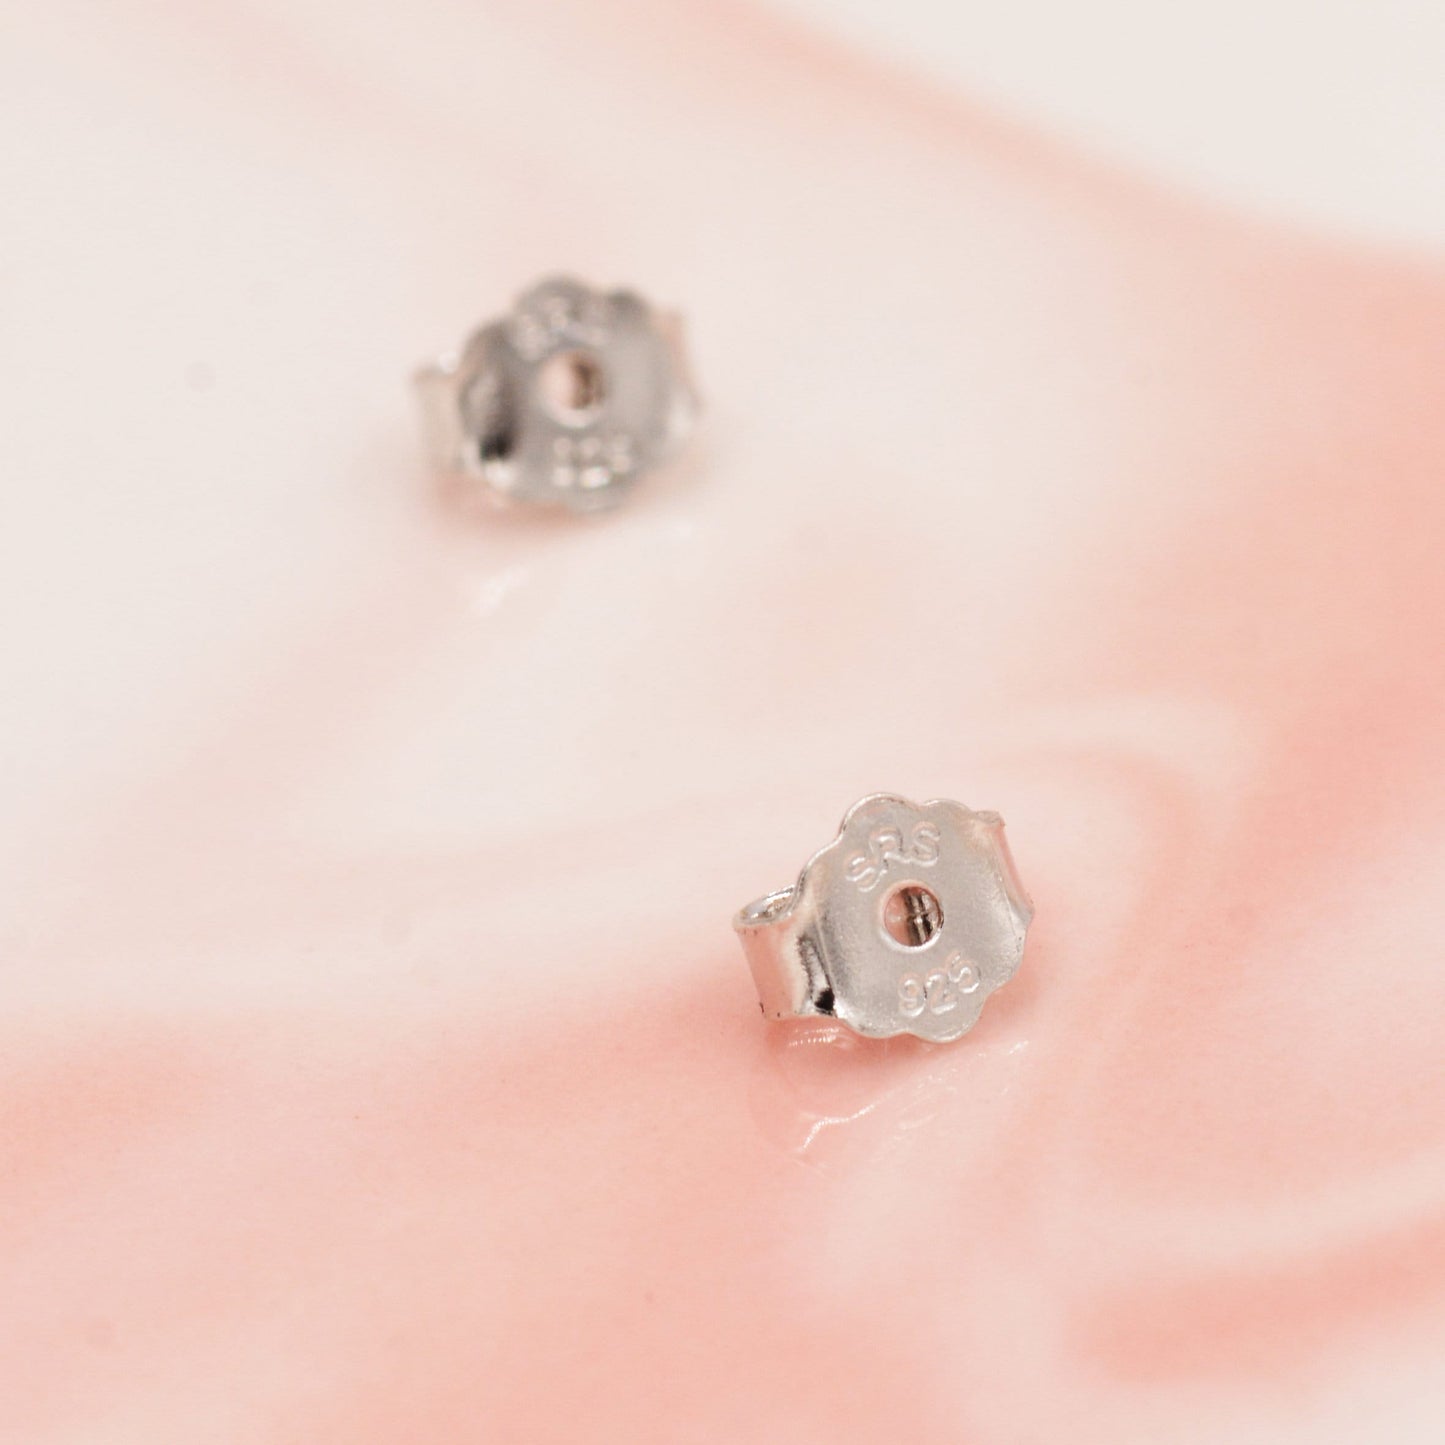 Natural Malachite Stone Stud Earrings in Sterling Silver - 5mm Genuine Malachite Stud Earrings  - Semi Precious Gemstone